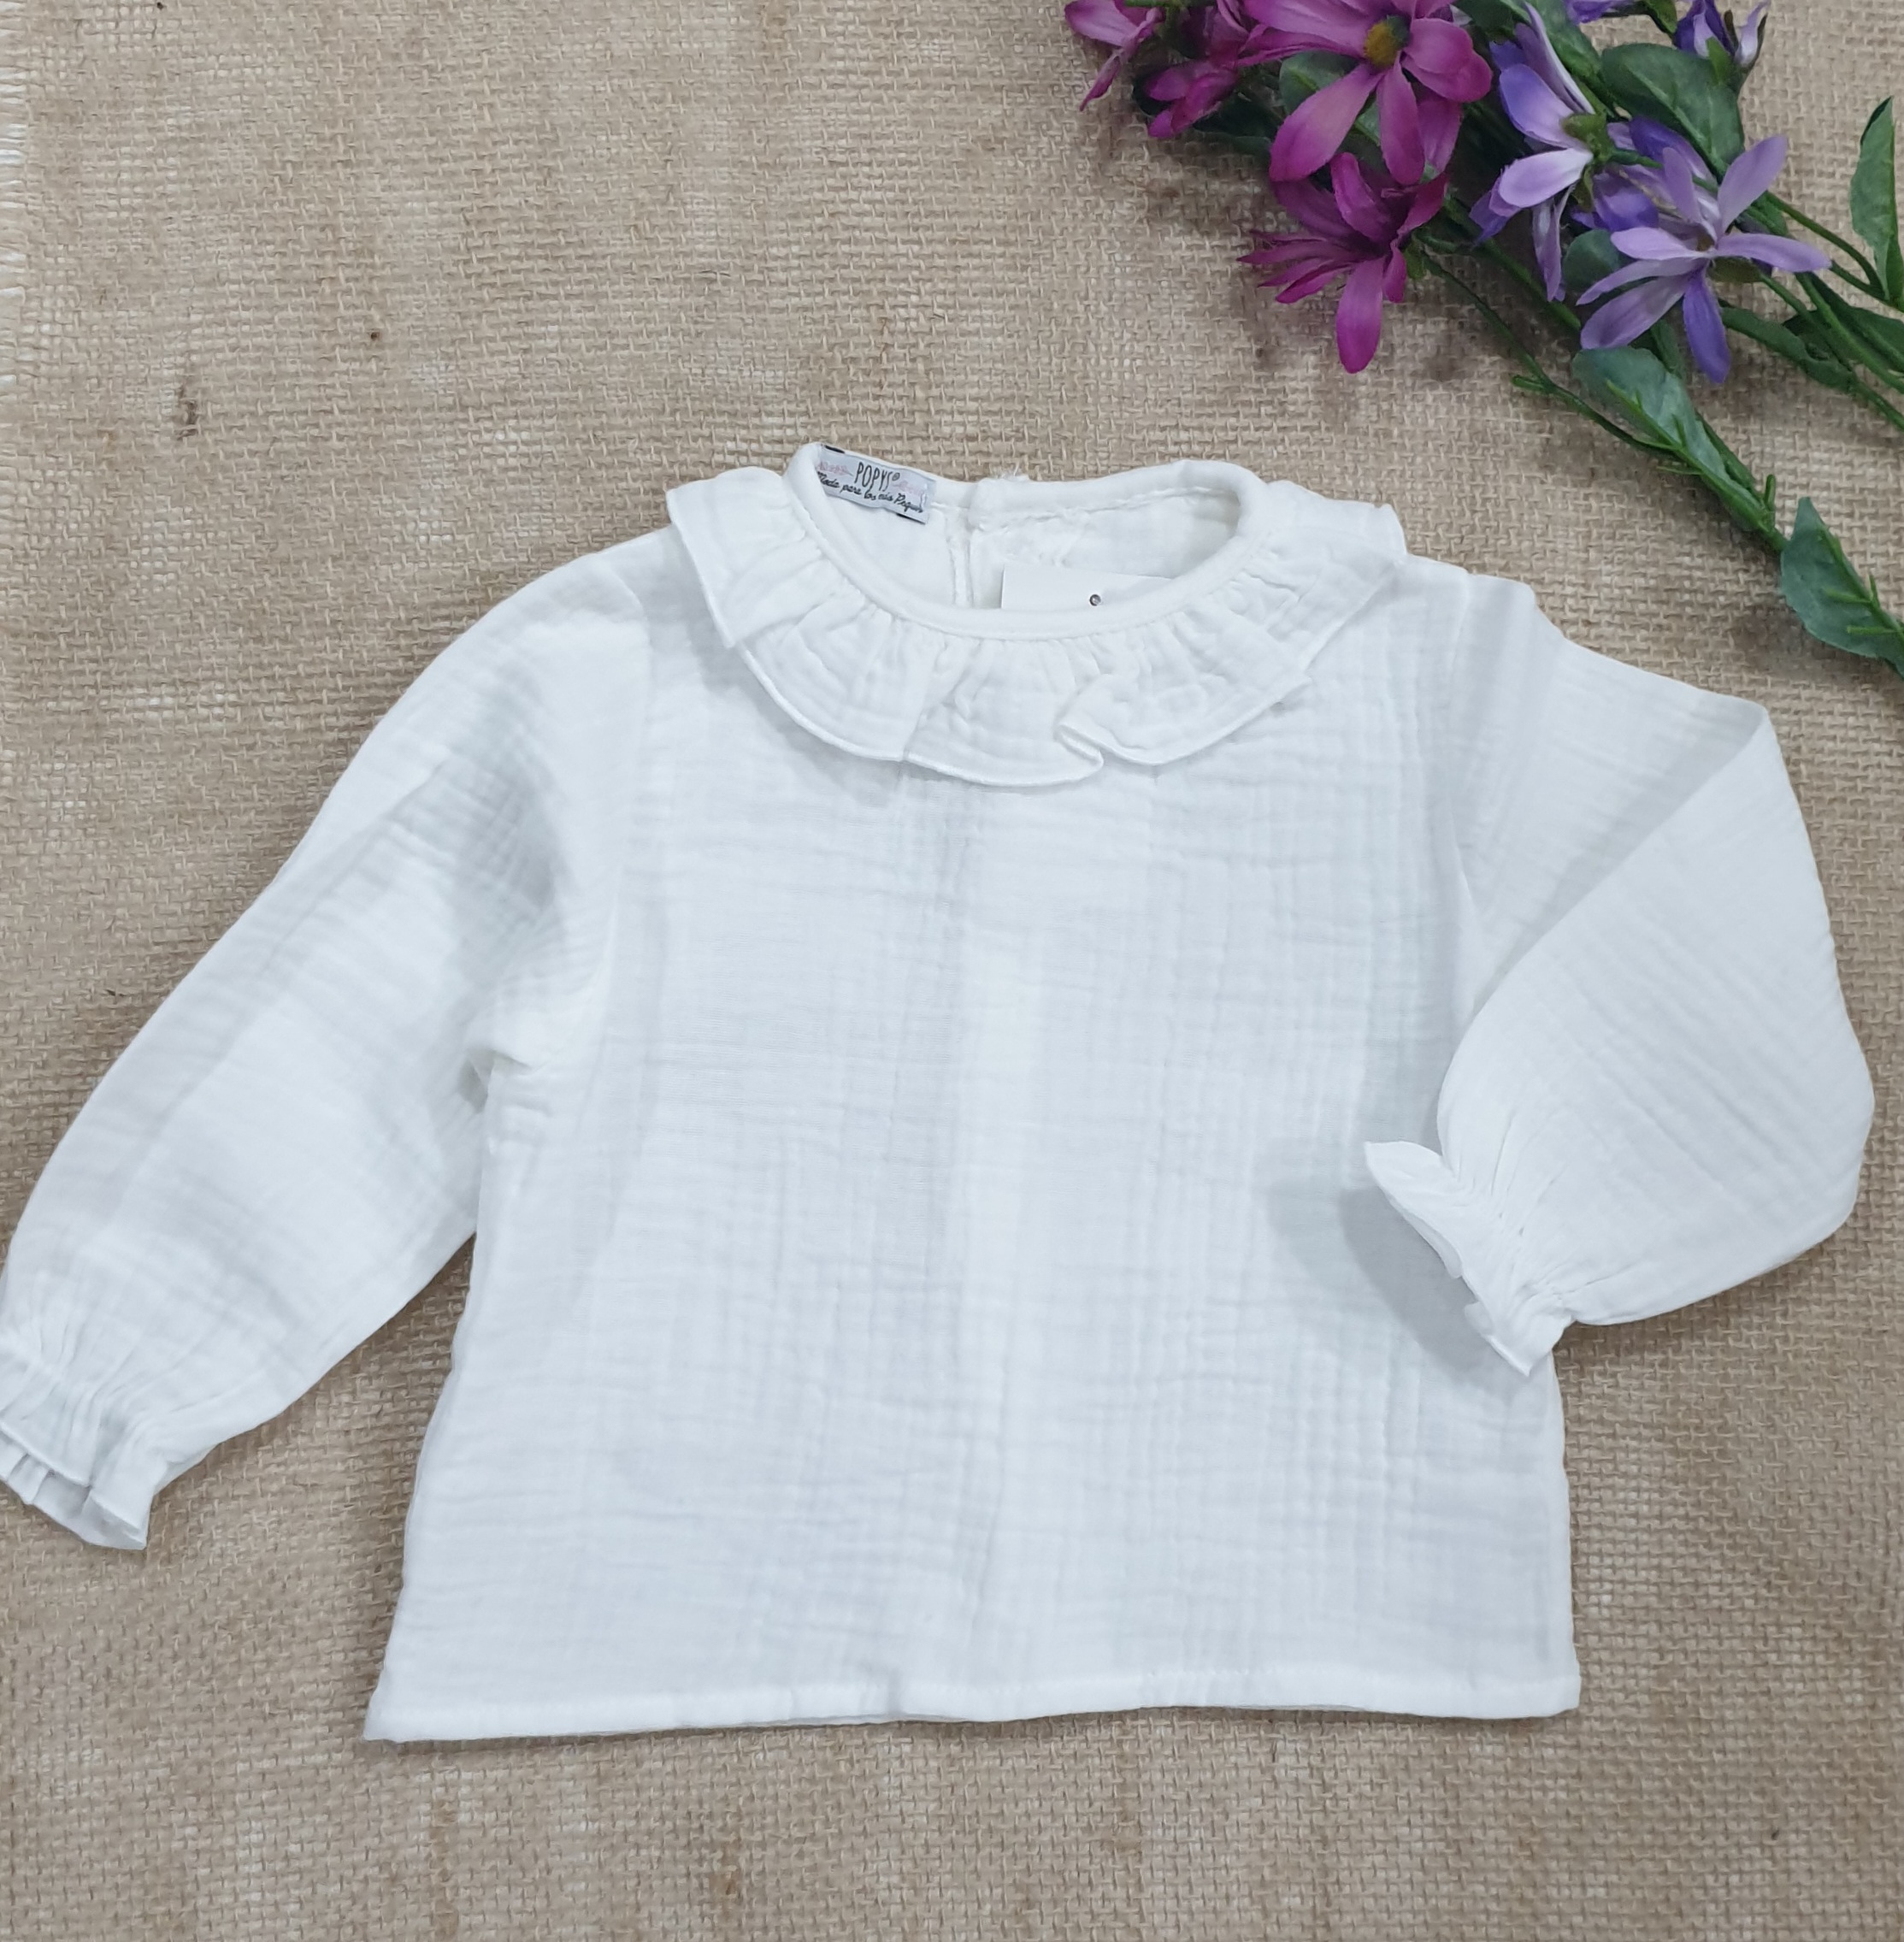 A Blusa unisex manga larga blanco roto R130432 - Tienda moda infantil online | Corrales